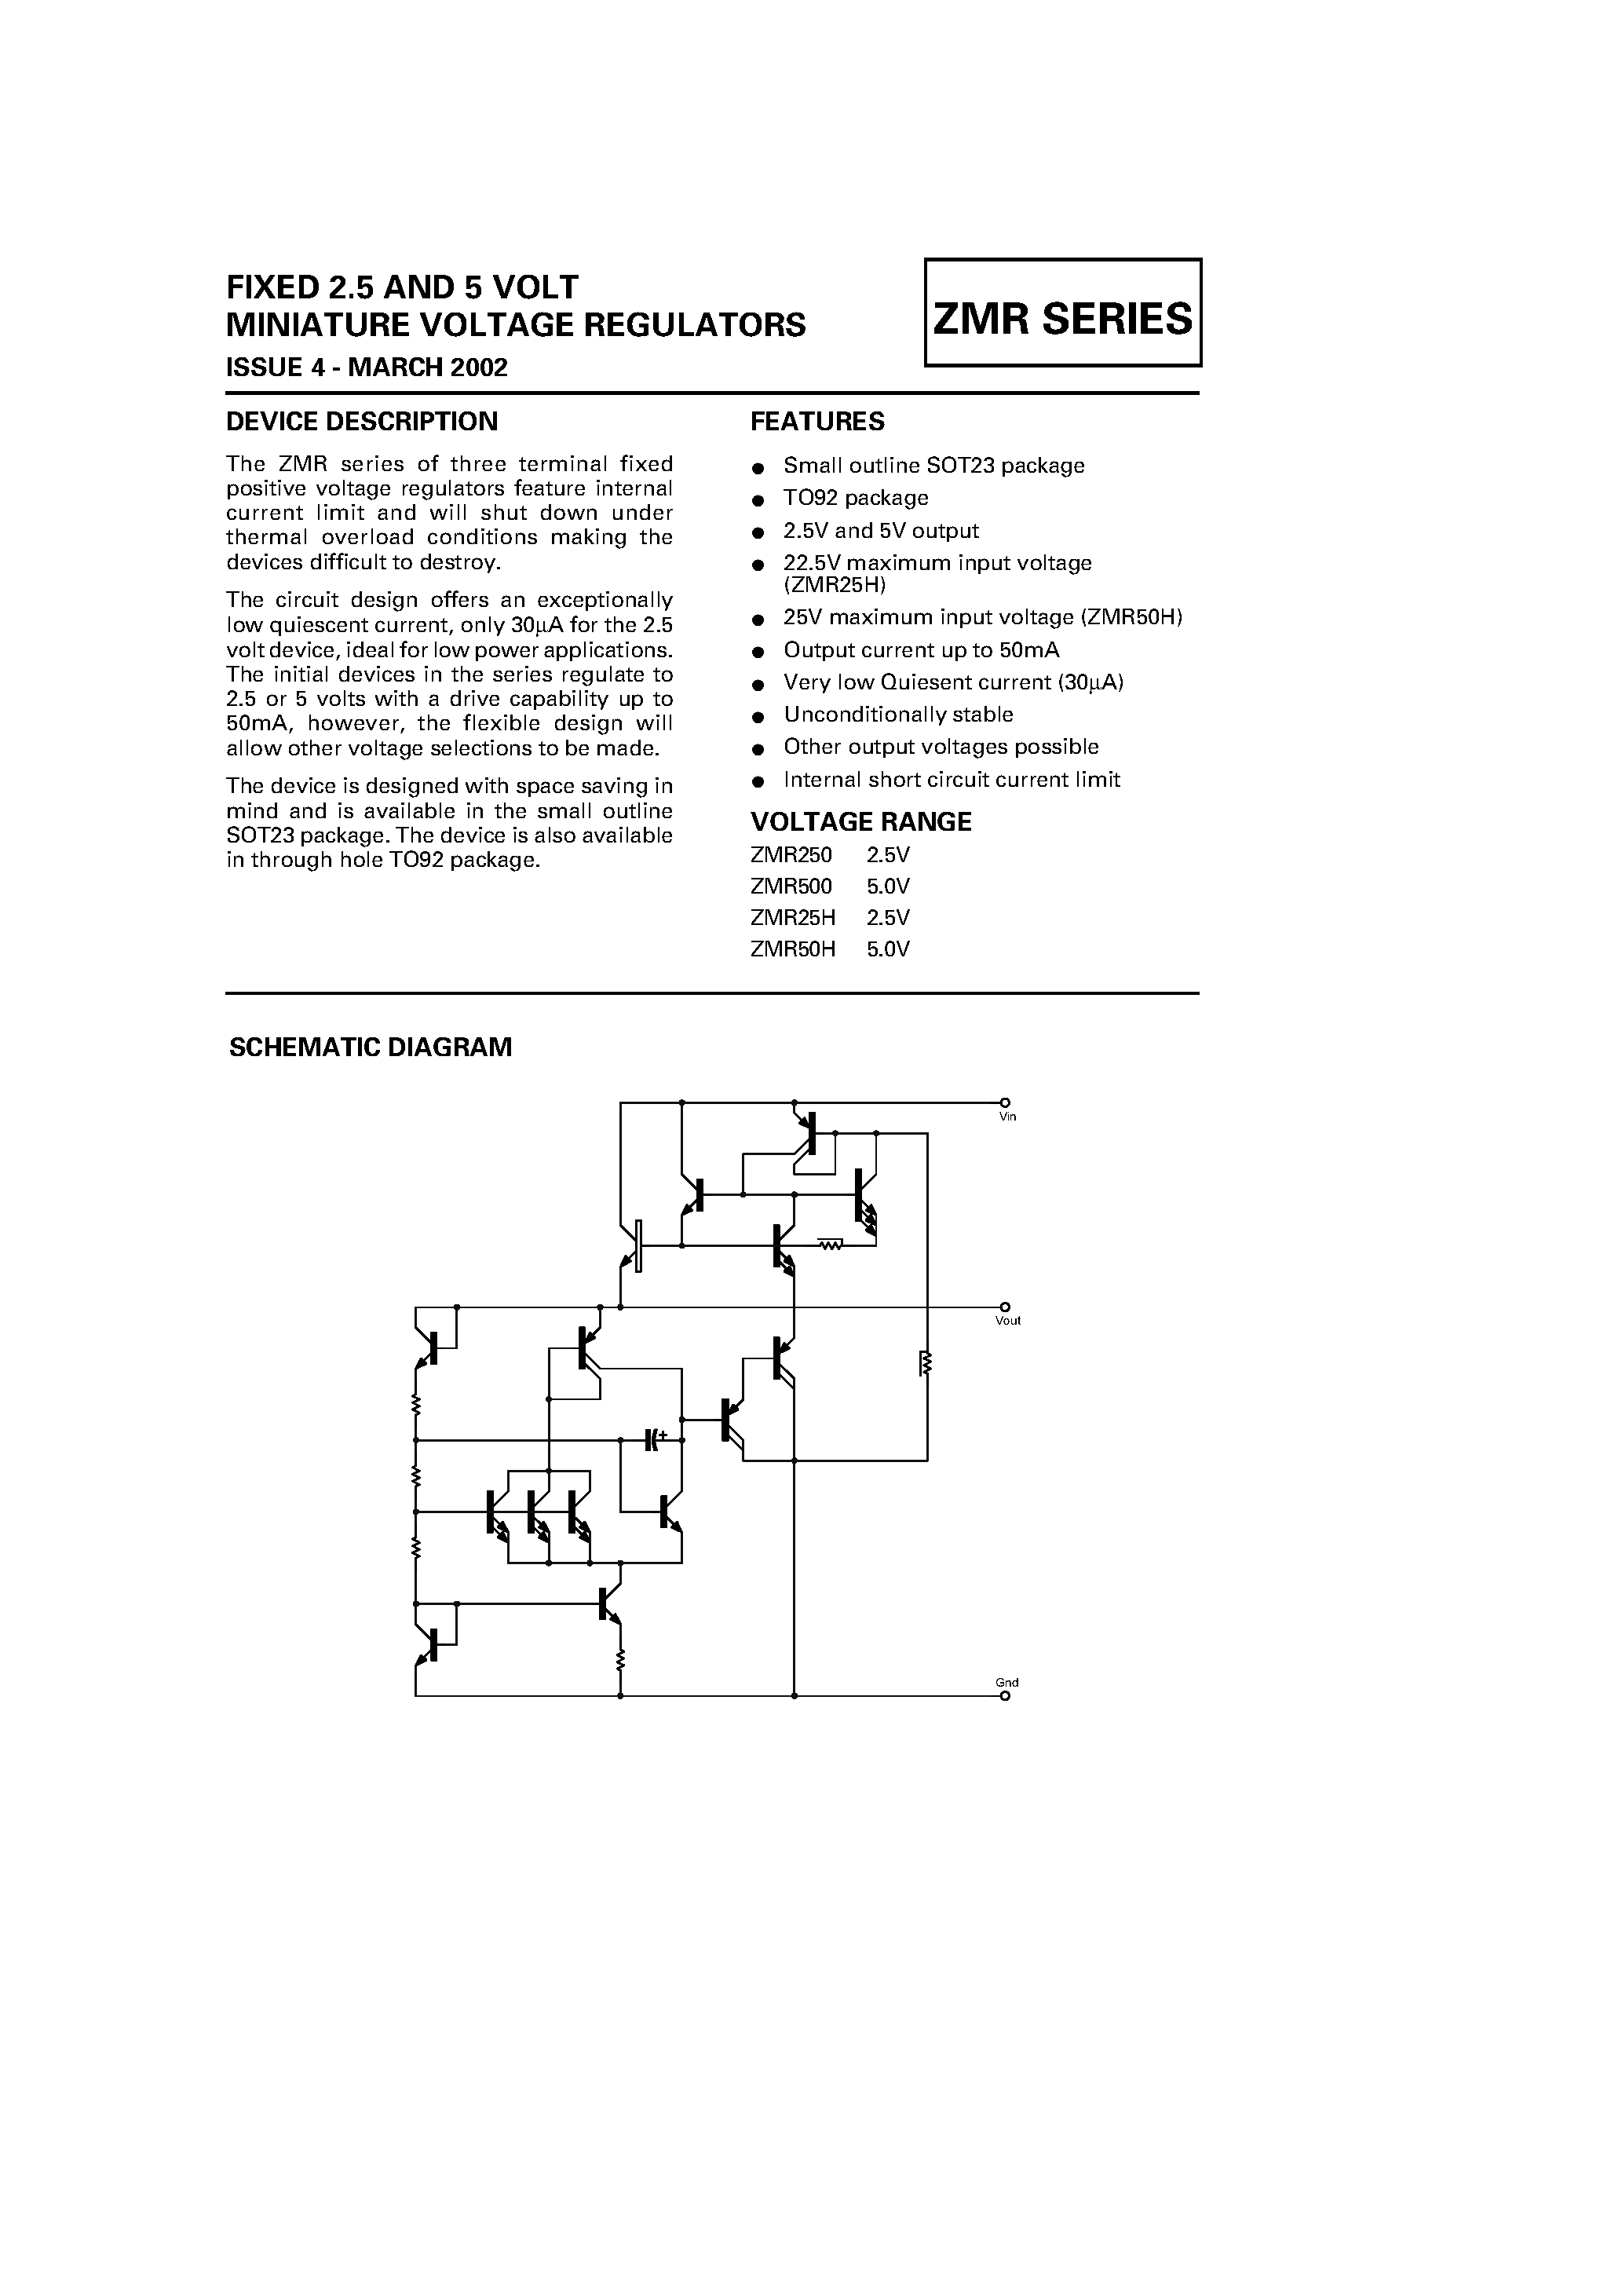 Datasheet ZMR250F - FIXED 2.5 AND 5 VOLT MINIATURE VOLTAGE REGULATORS page 1